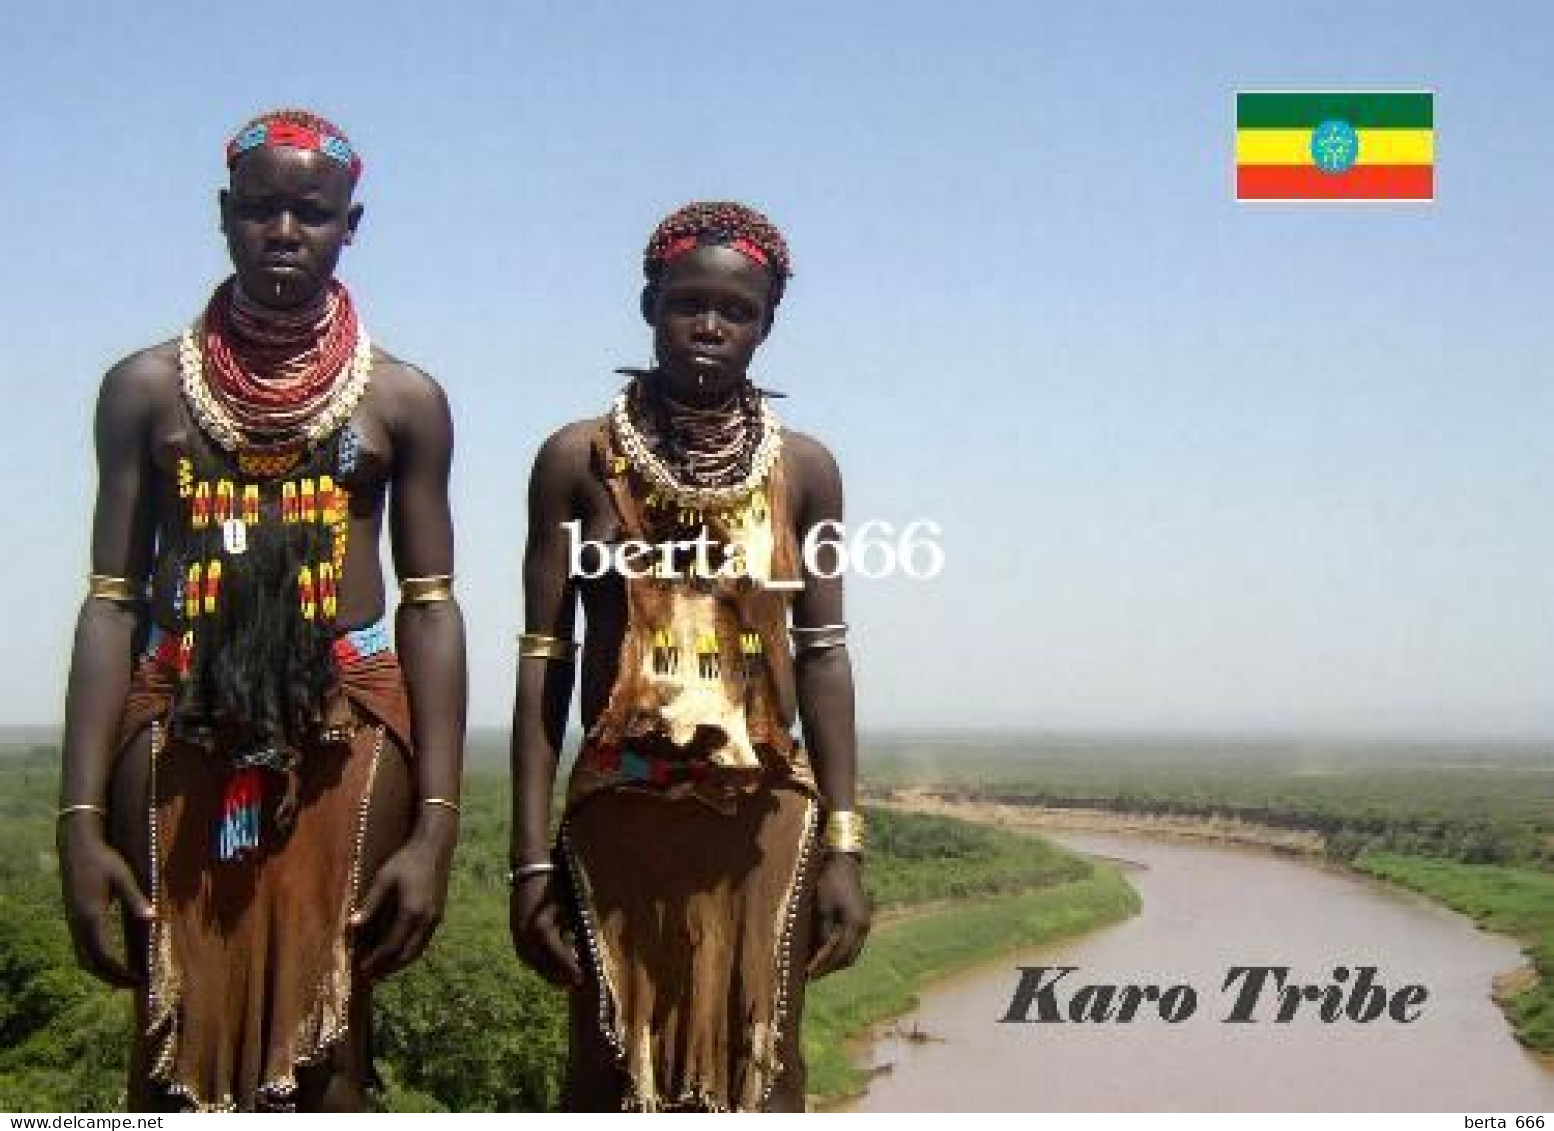 Ethiopia Karo People New Postcard - Africa